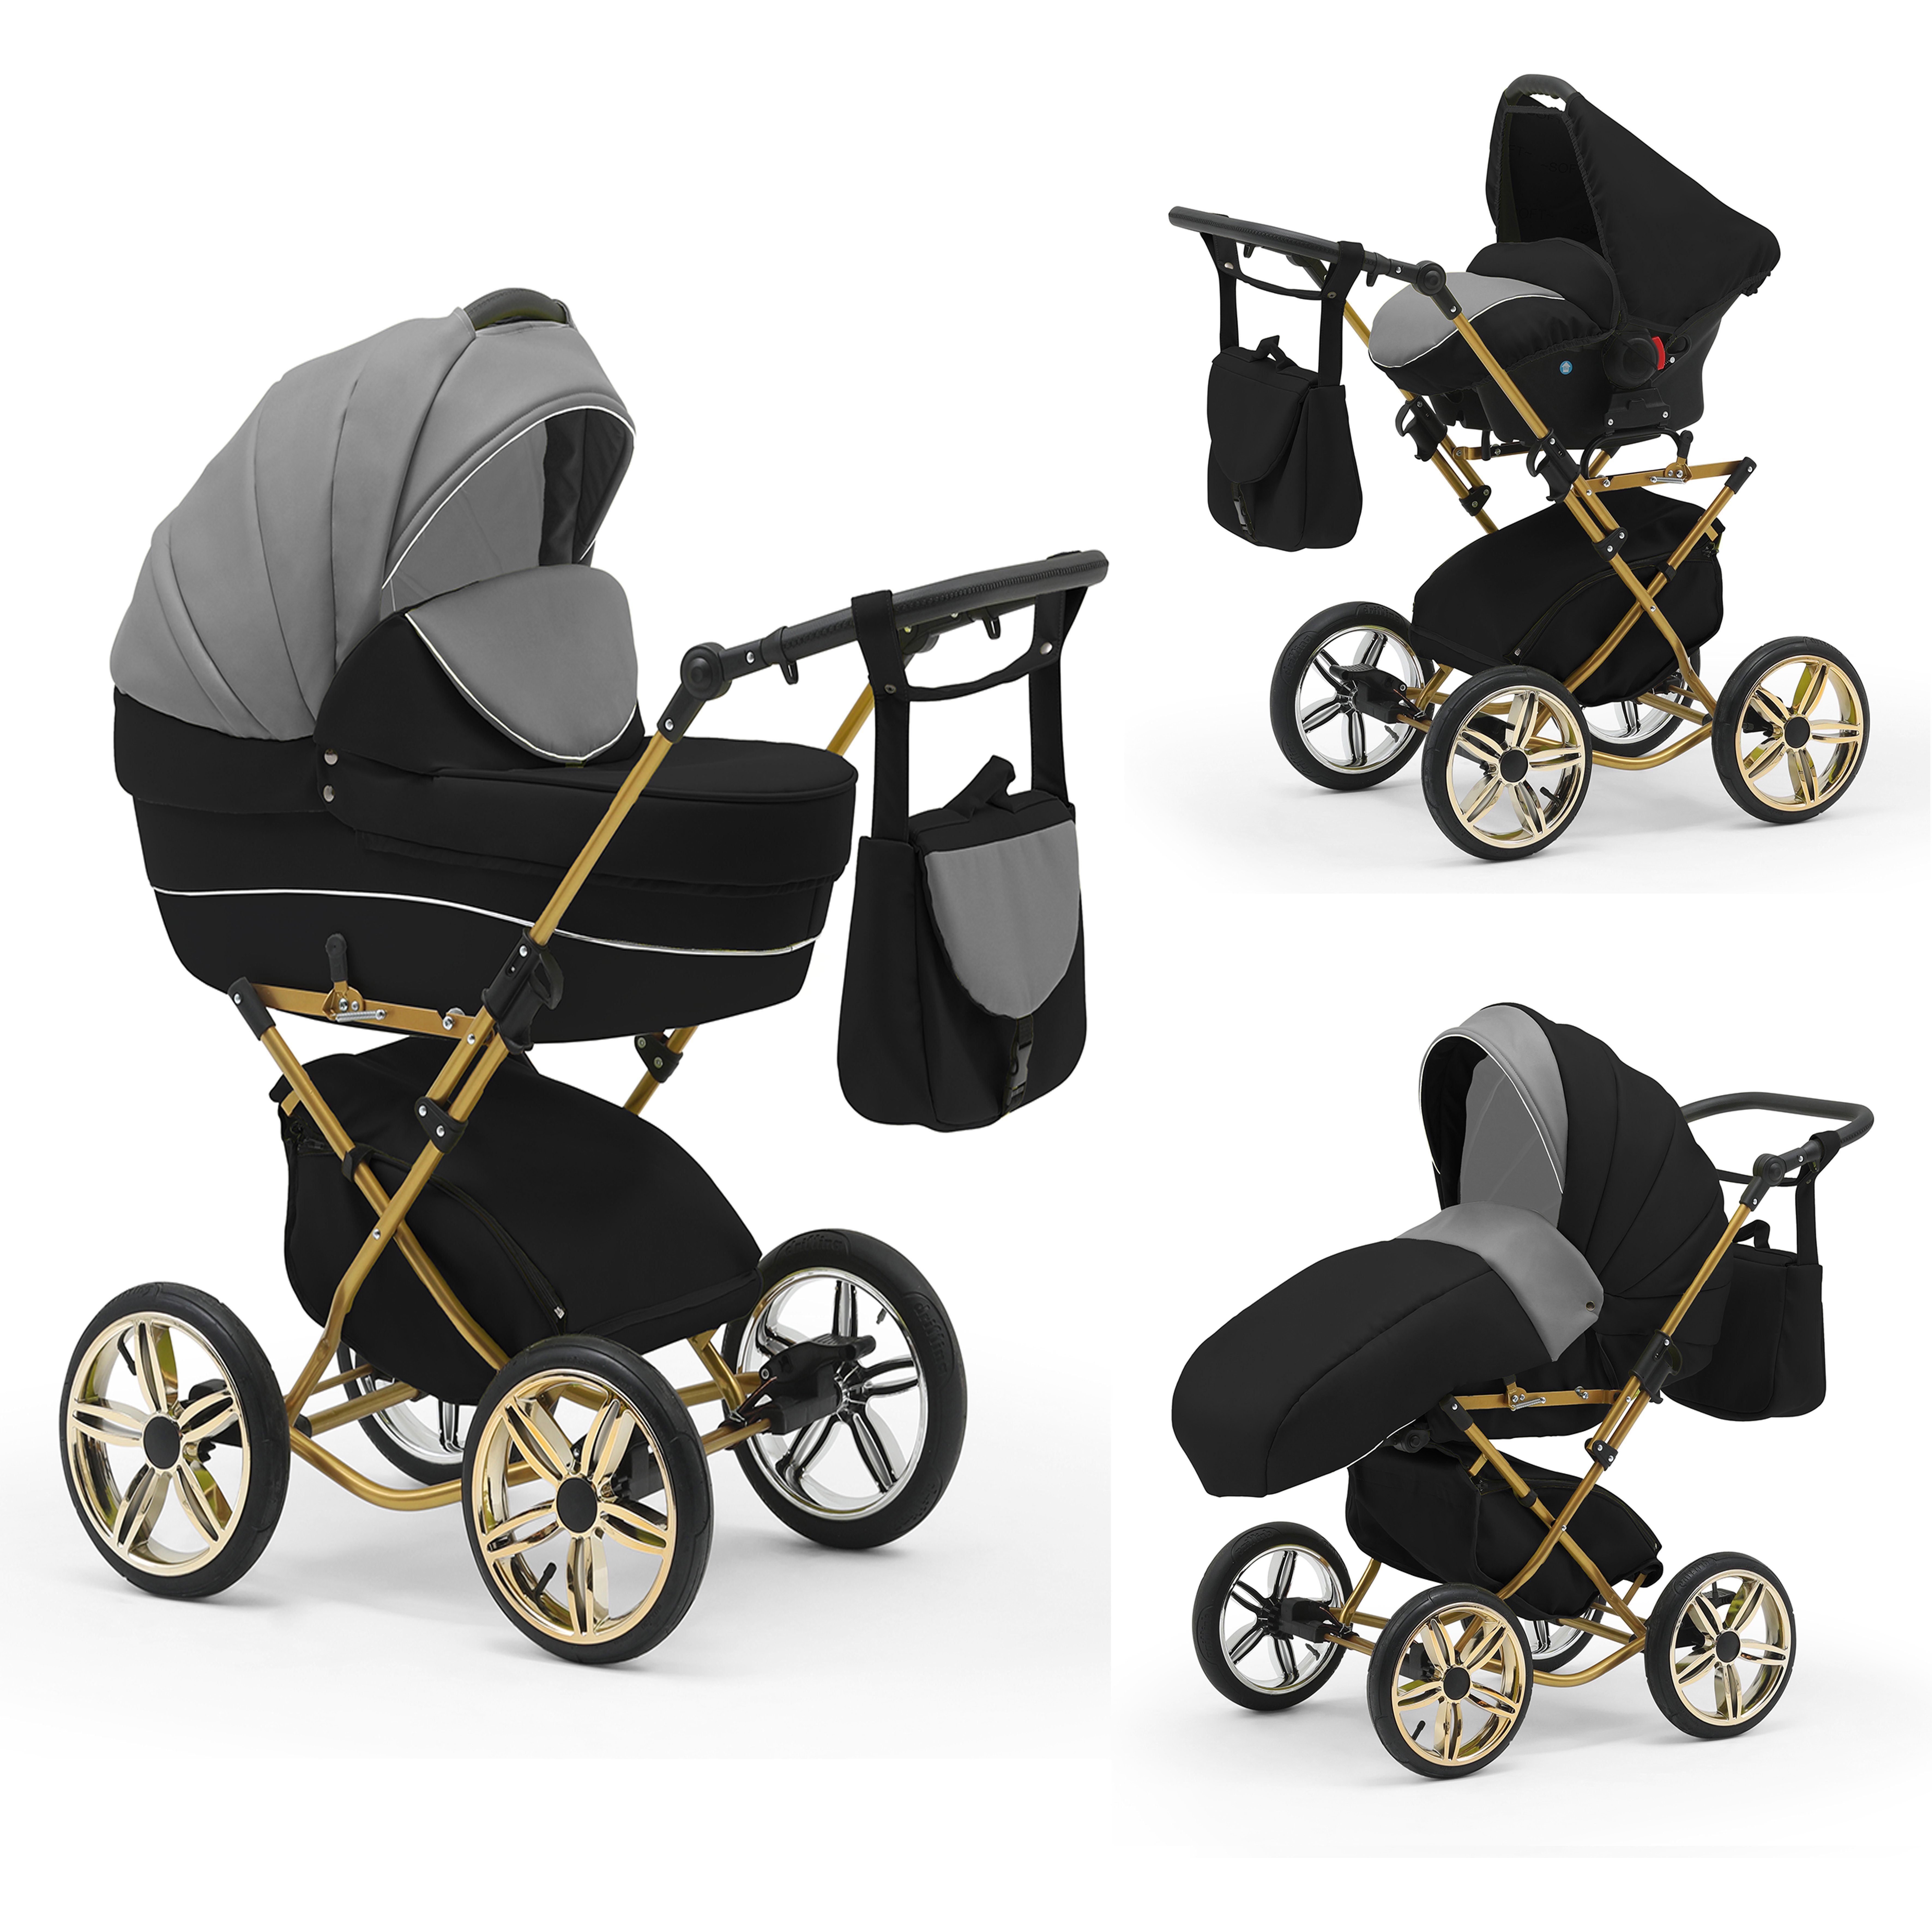 babies-on-wheels Kombi-Kinderwagen Sorento 3 in 1 inkl. Autositz - 13 Teile - in 10 Designs Grau-Schwarz